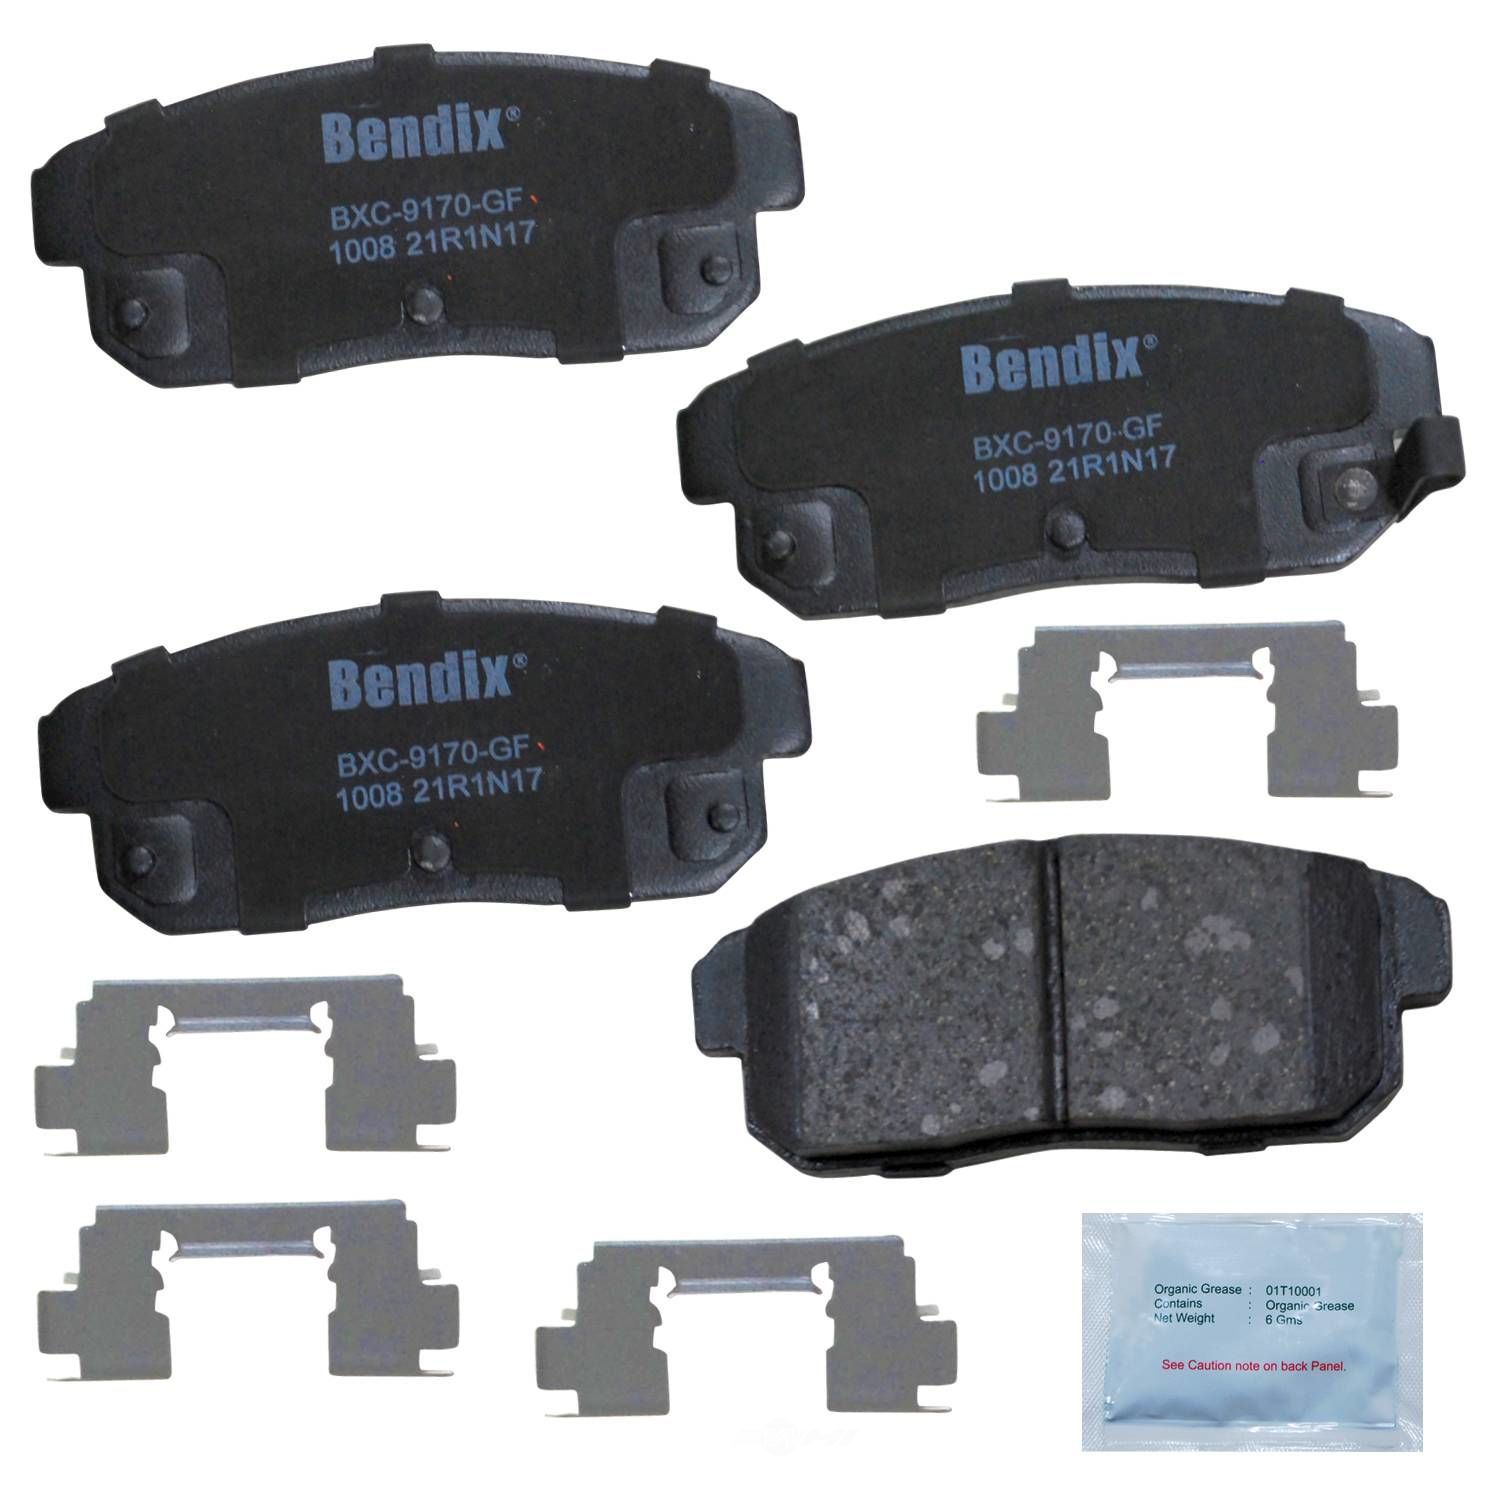 BENDIX PREMIUM COPPER FREE - Bendix Priority One Ceramic BPR - BPF CFC1008